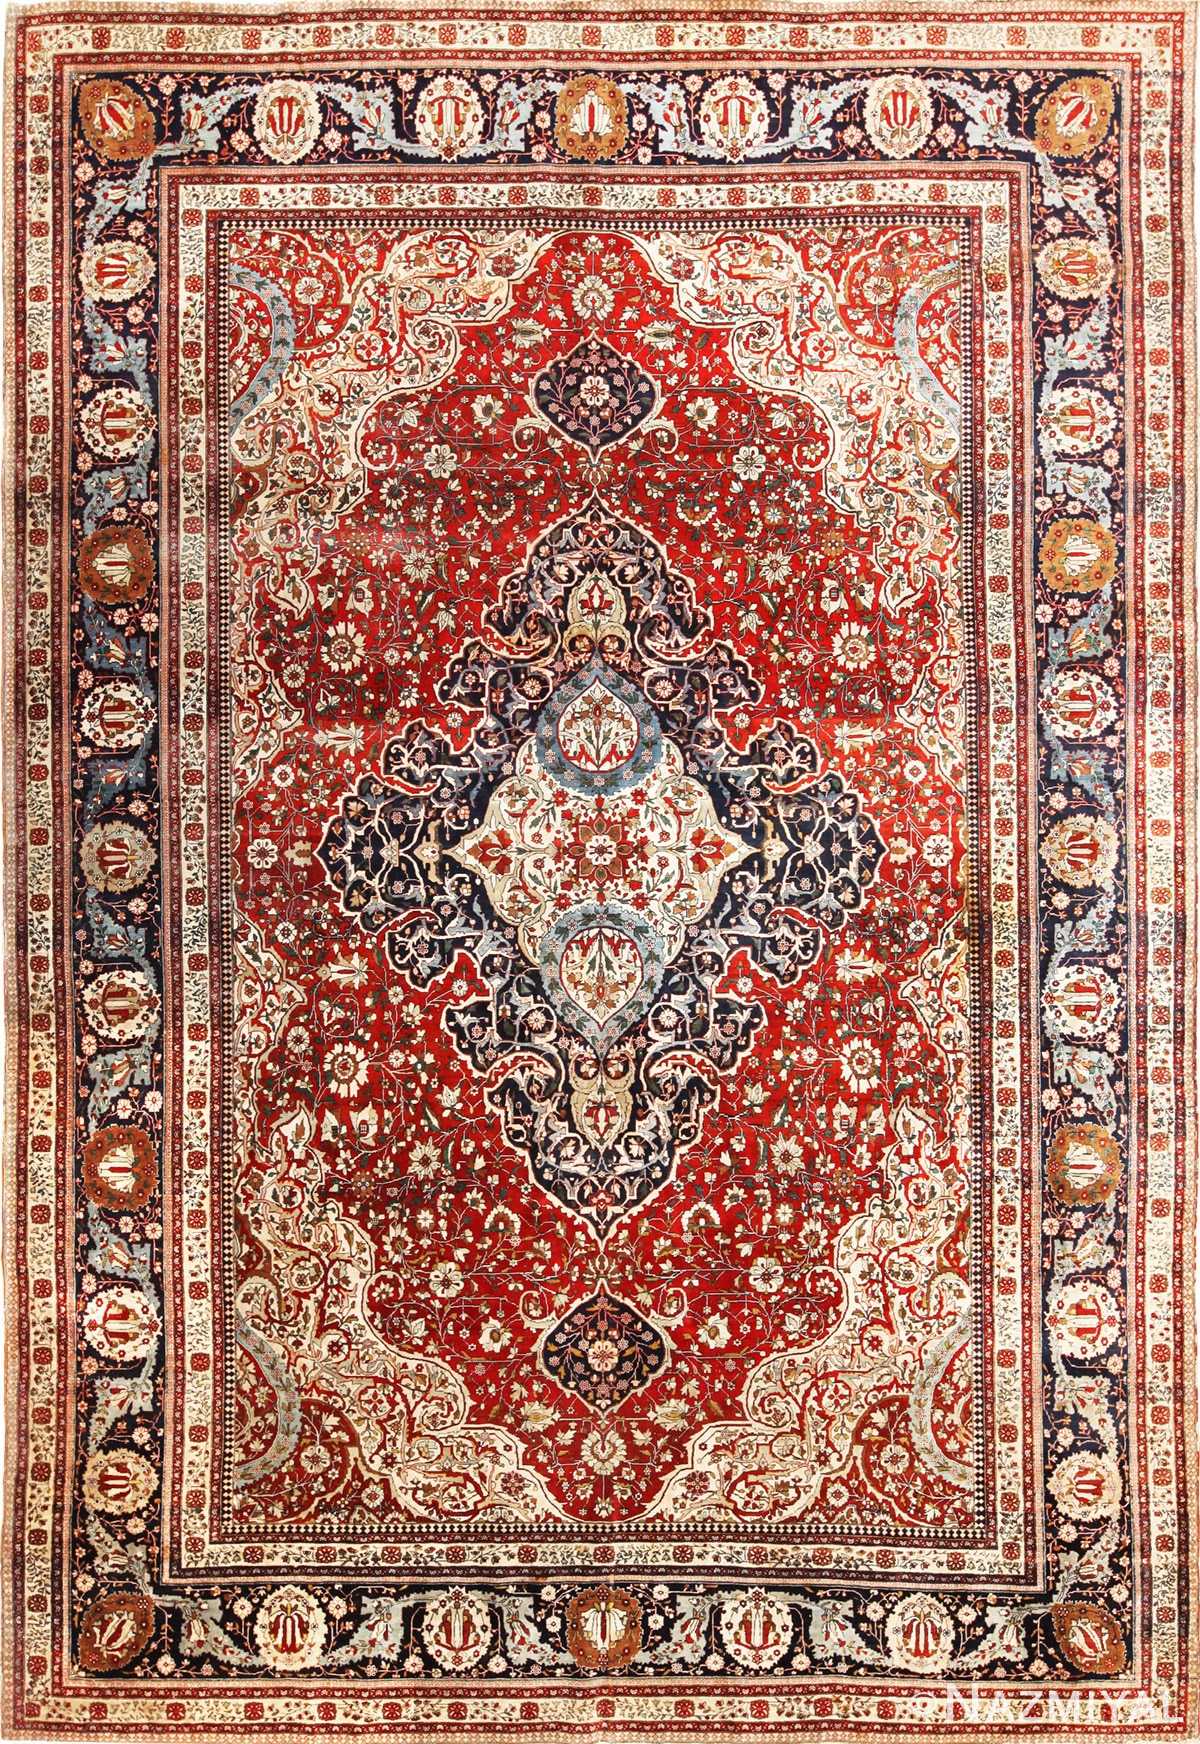 Beautiful Antique Persian Kashan Mohtashem Rug 70175 by Nazmiyal